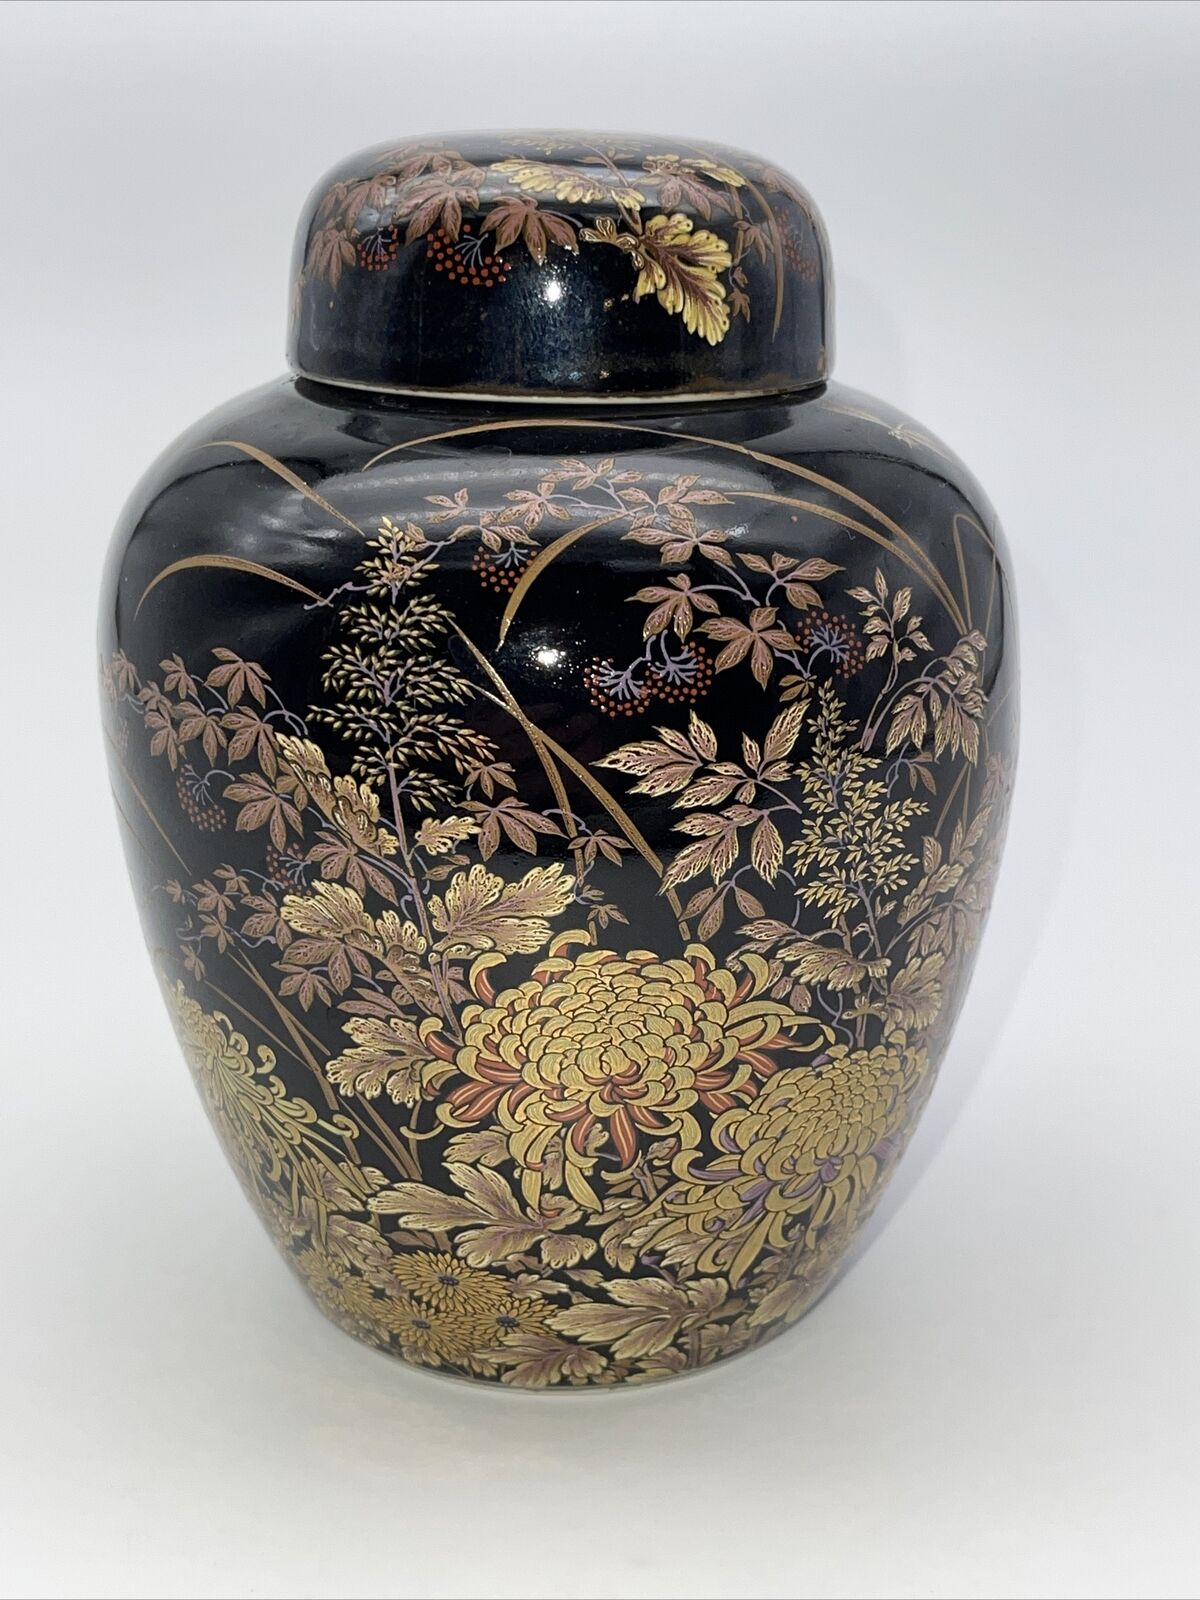 Shibata Vase Porcelain Dragonfly Chrysanthemum Flower Black Gold 7.5”Japan